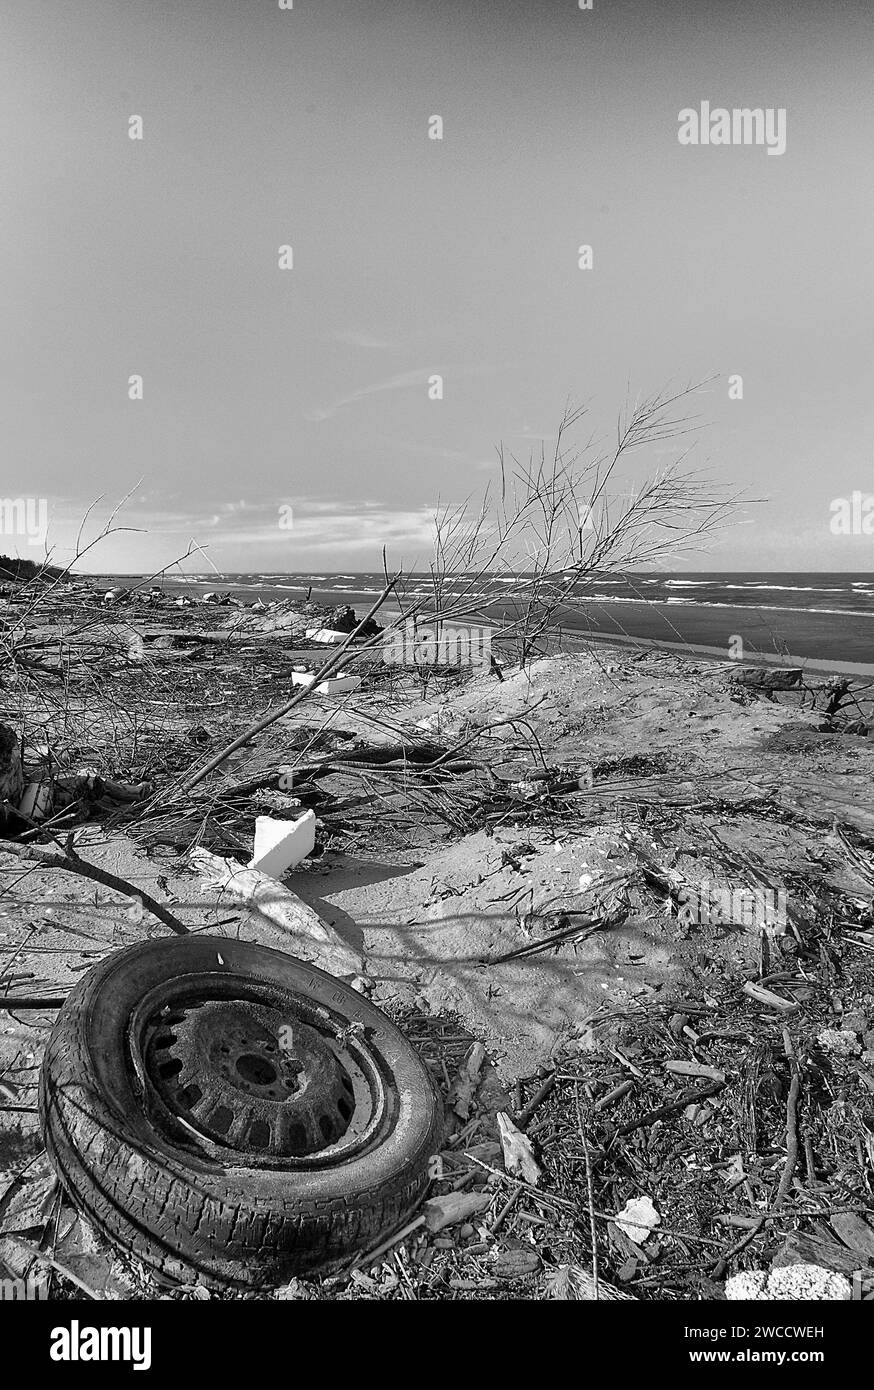 Boccasette (Ro), Po River Delta,Italy, some debris from he sea on he beach Stock Photo